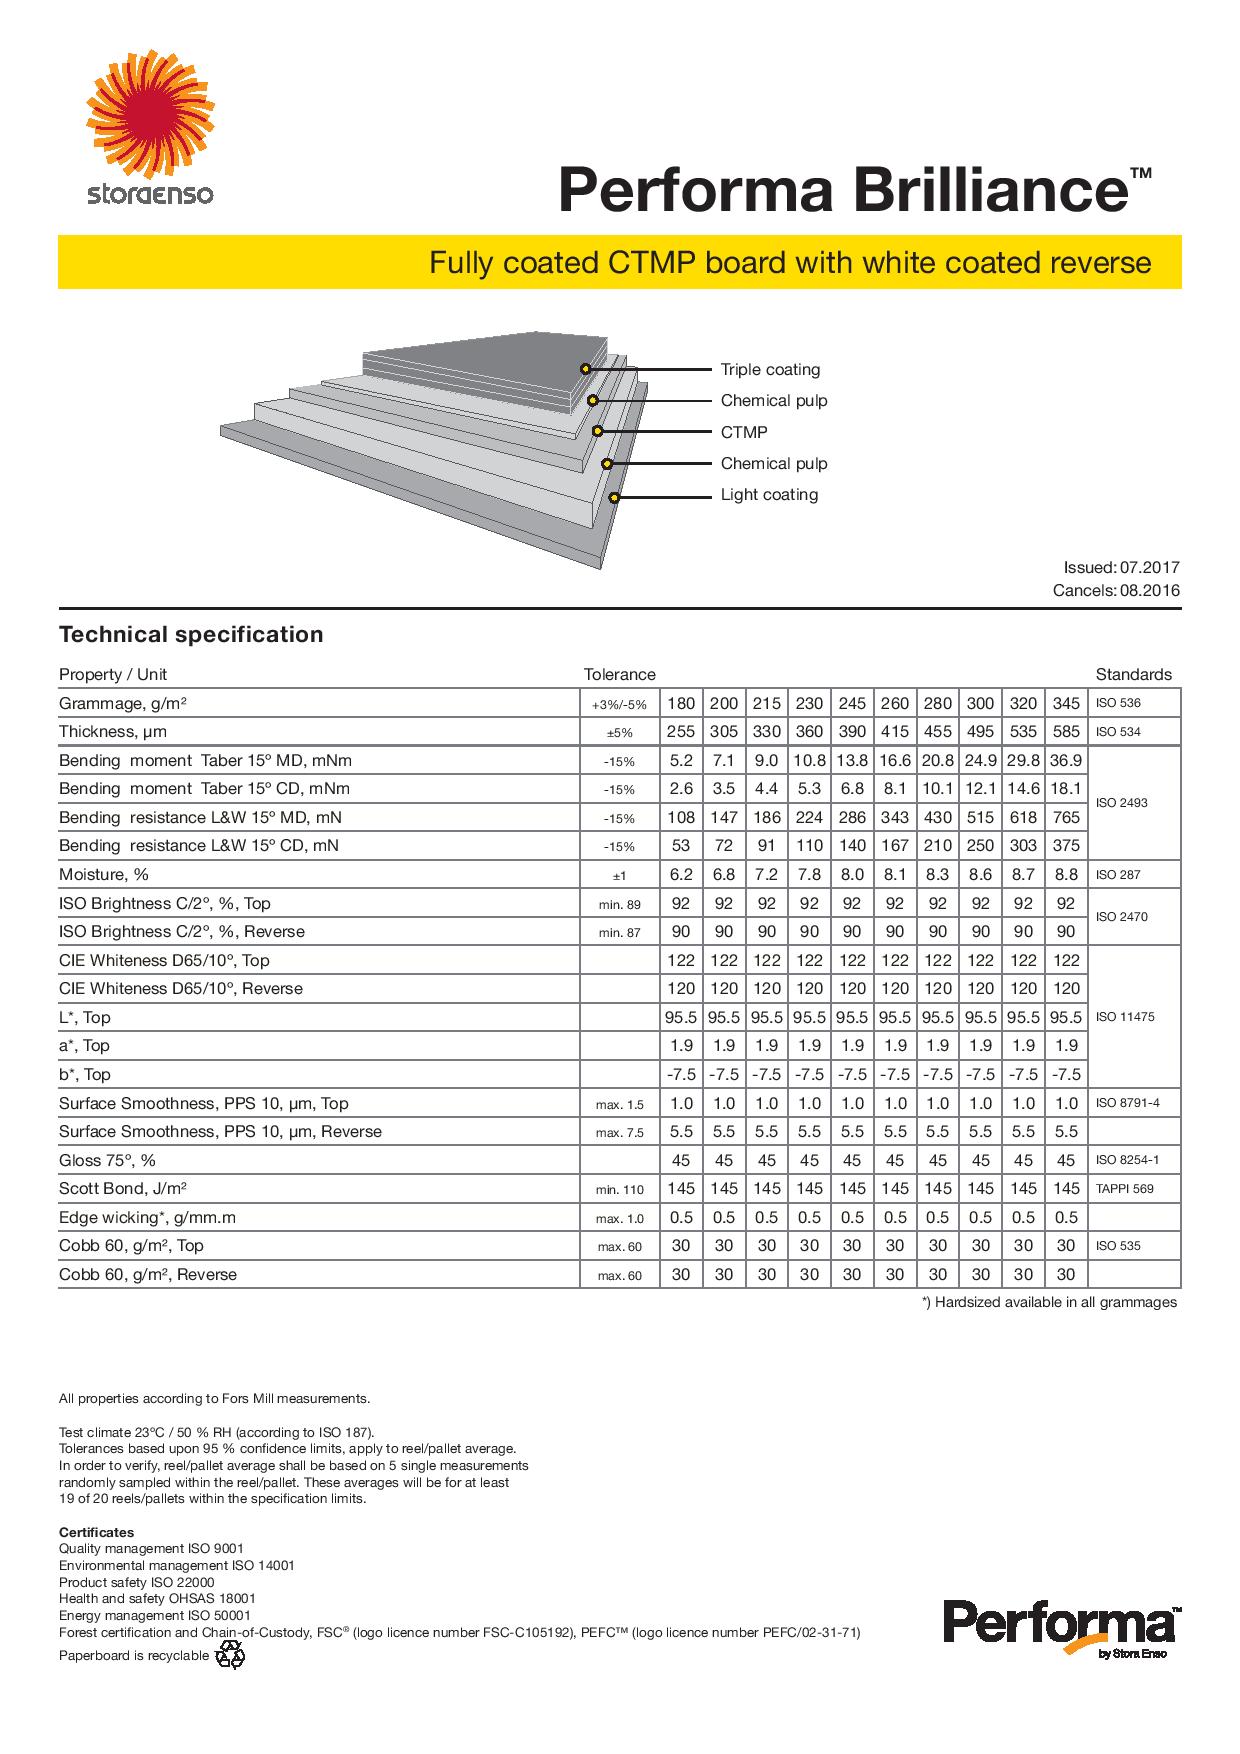 sbs paperboard specifications